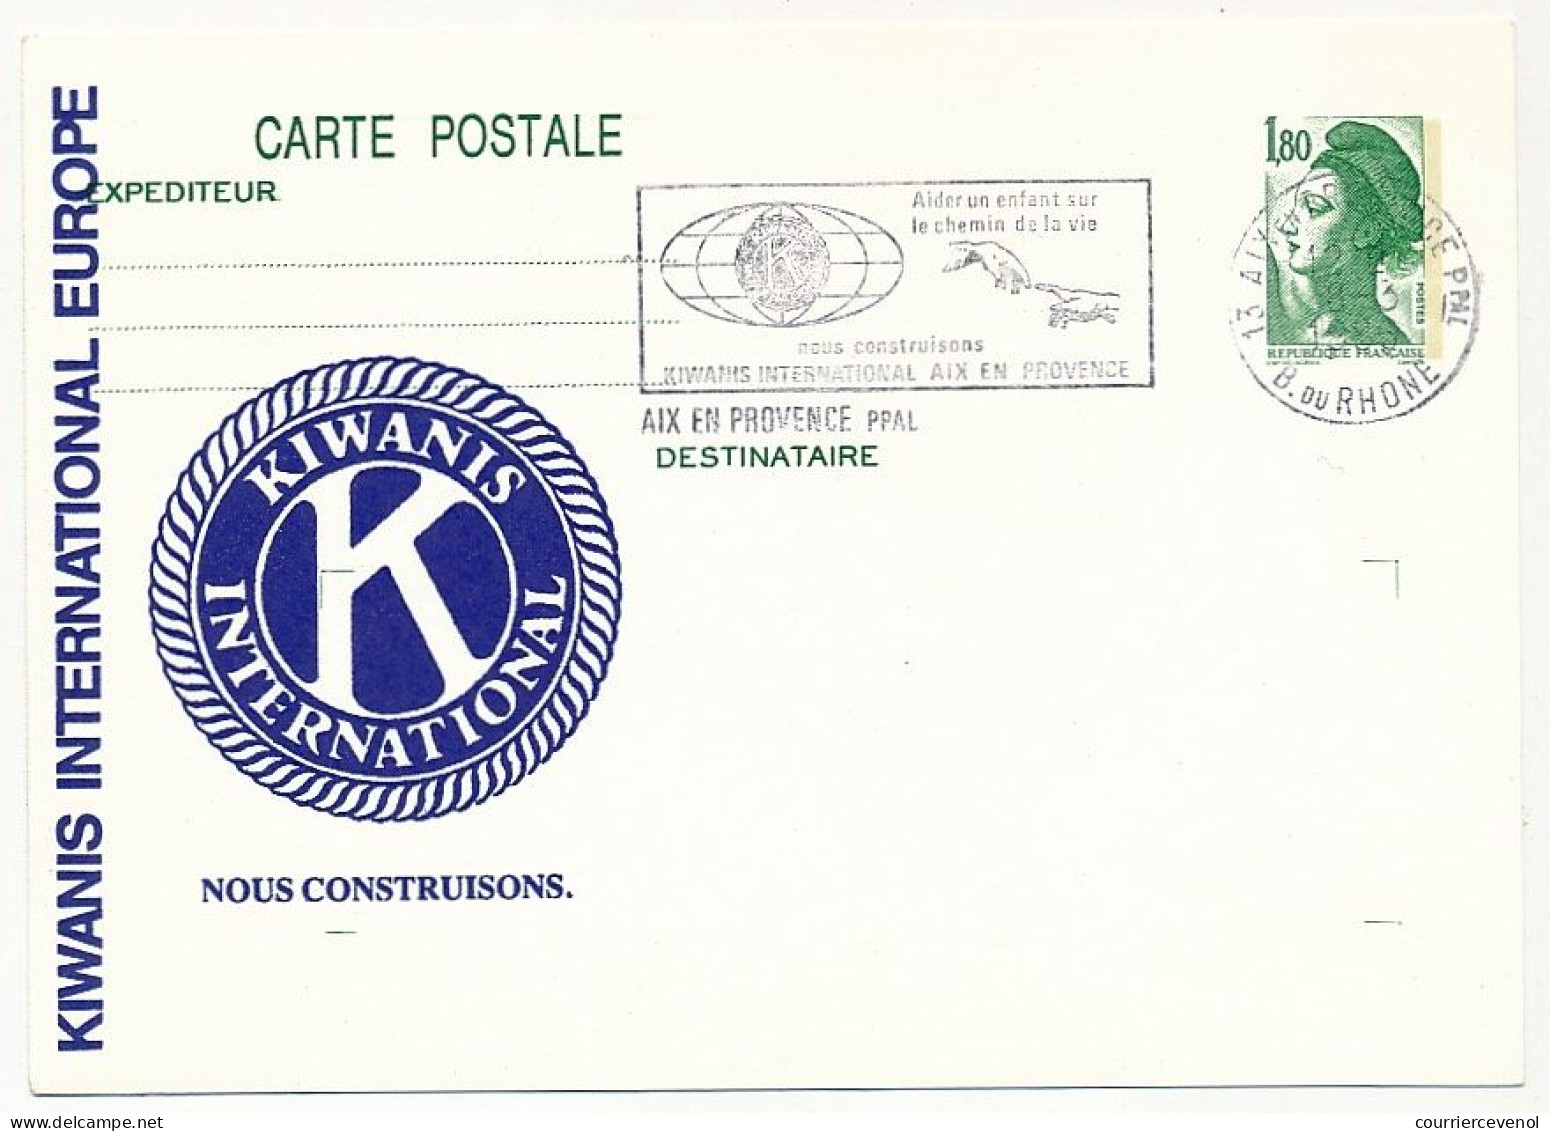 Entier Repiqué - C.P. 1,80 Liberté - KIWANIS INTERNATIONAL EUROPE Omec Idem Aix En Provence 18/3/1986 - Cartes Postales Repiquages (avant 1995)